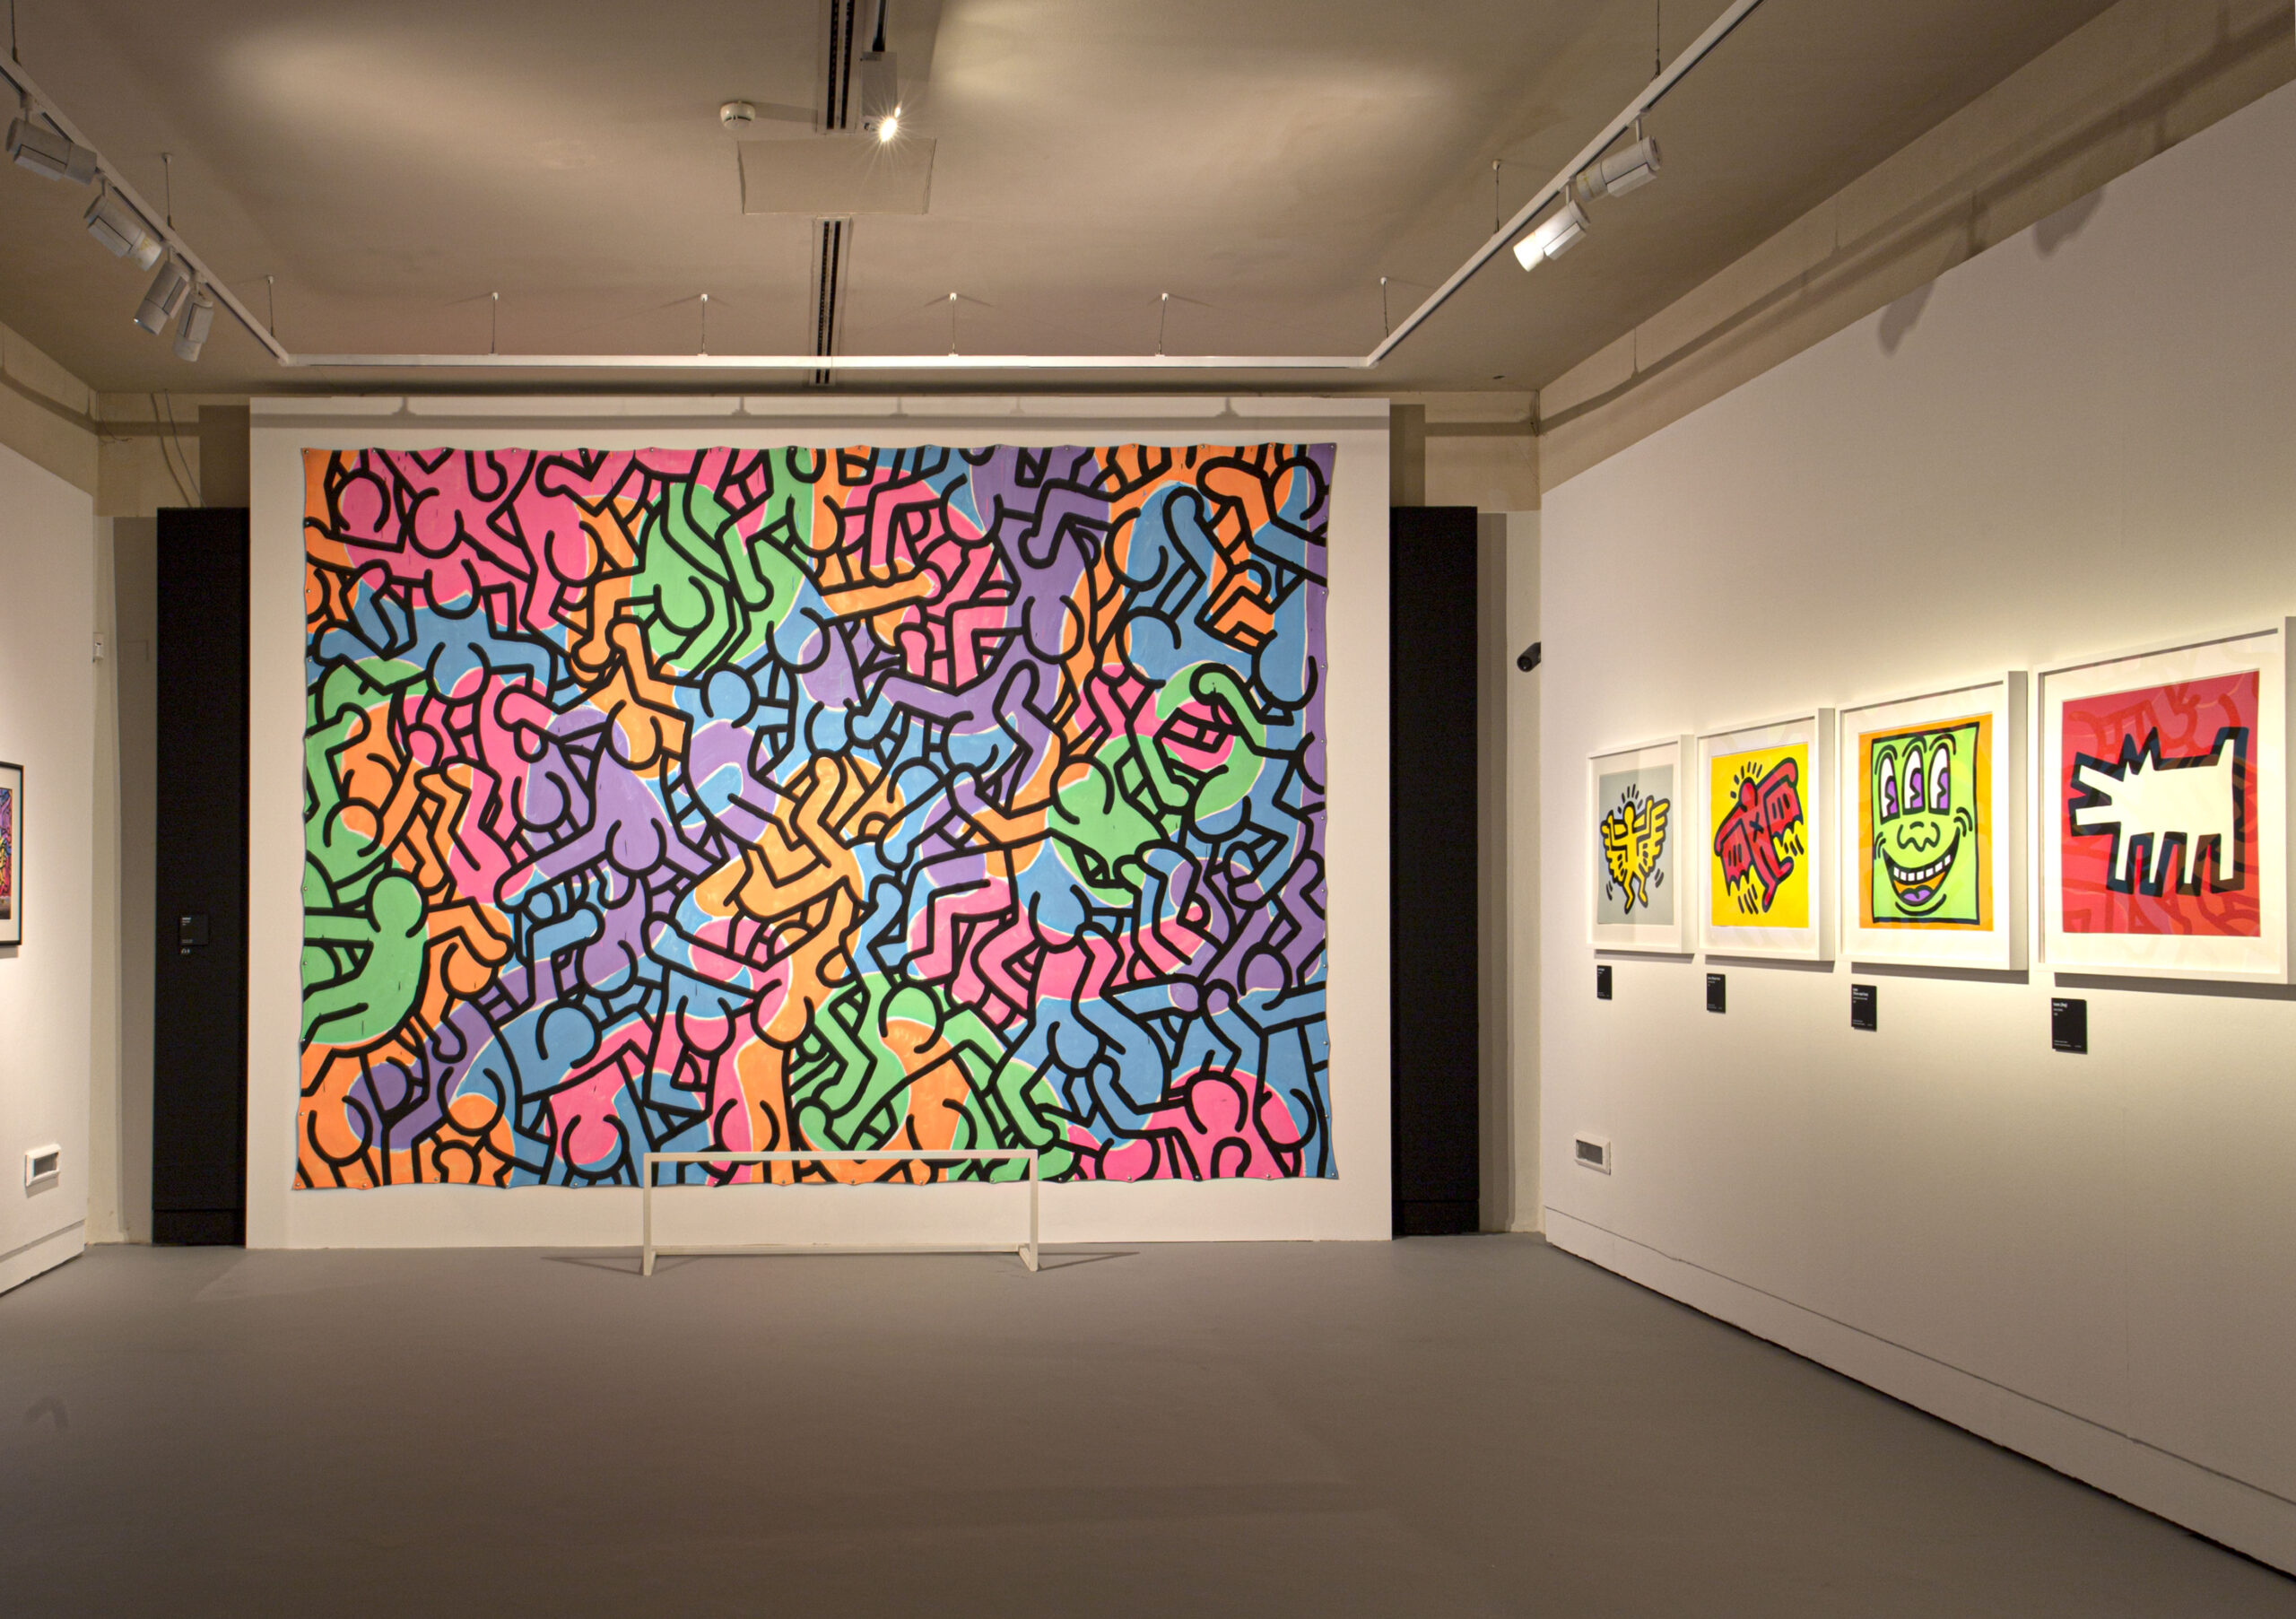 Until 18th April: Exhibition “Keith Haring” at Palazzo Blu | Pisa